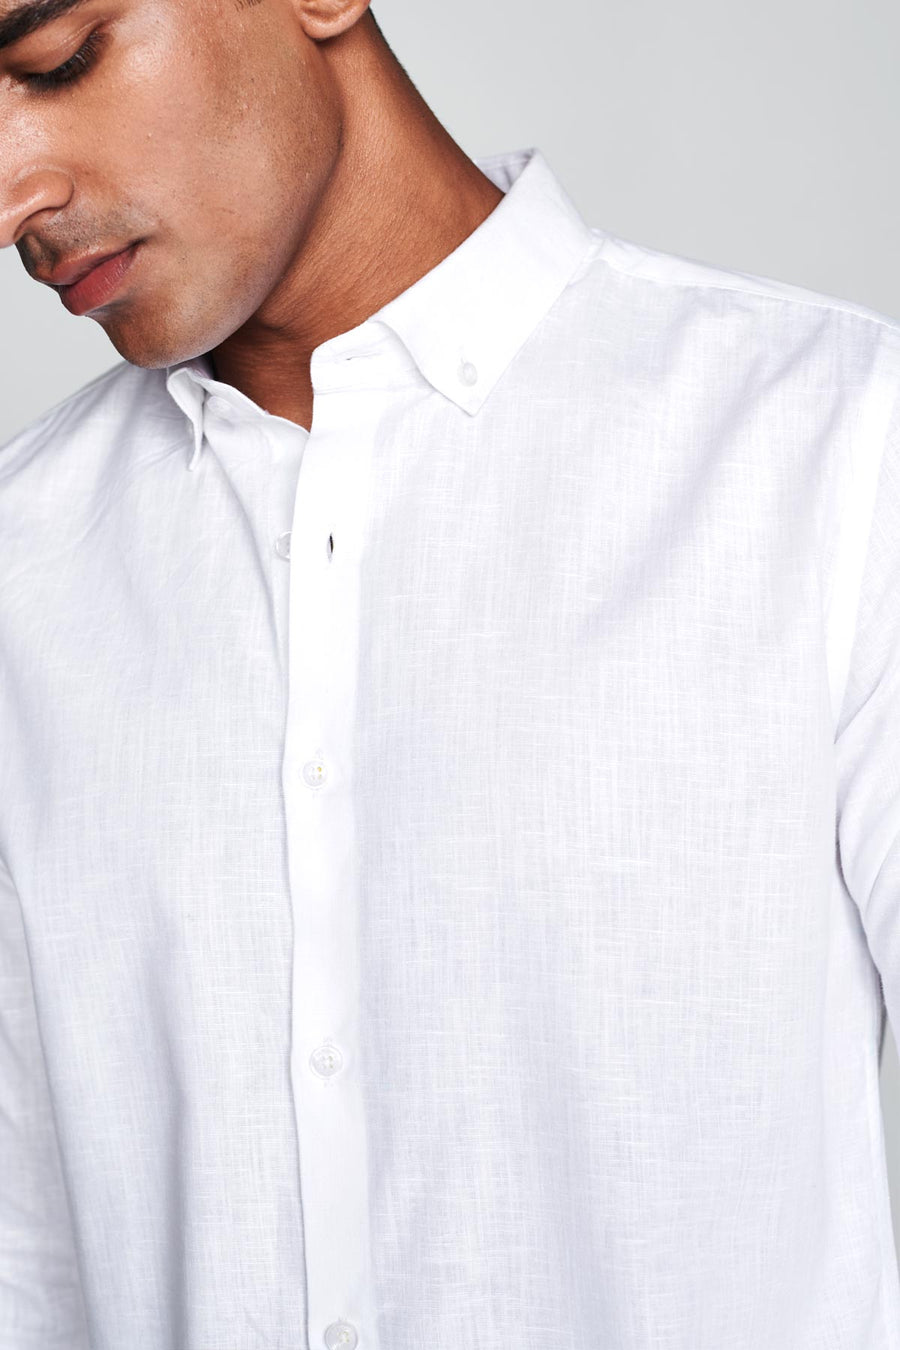 Buy Men’s Cotton Linen Shirts Online | Cotton Linen Shirt | Beyours